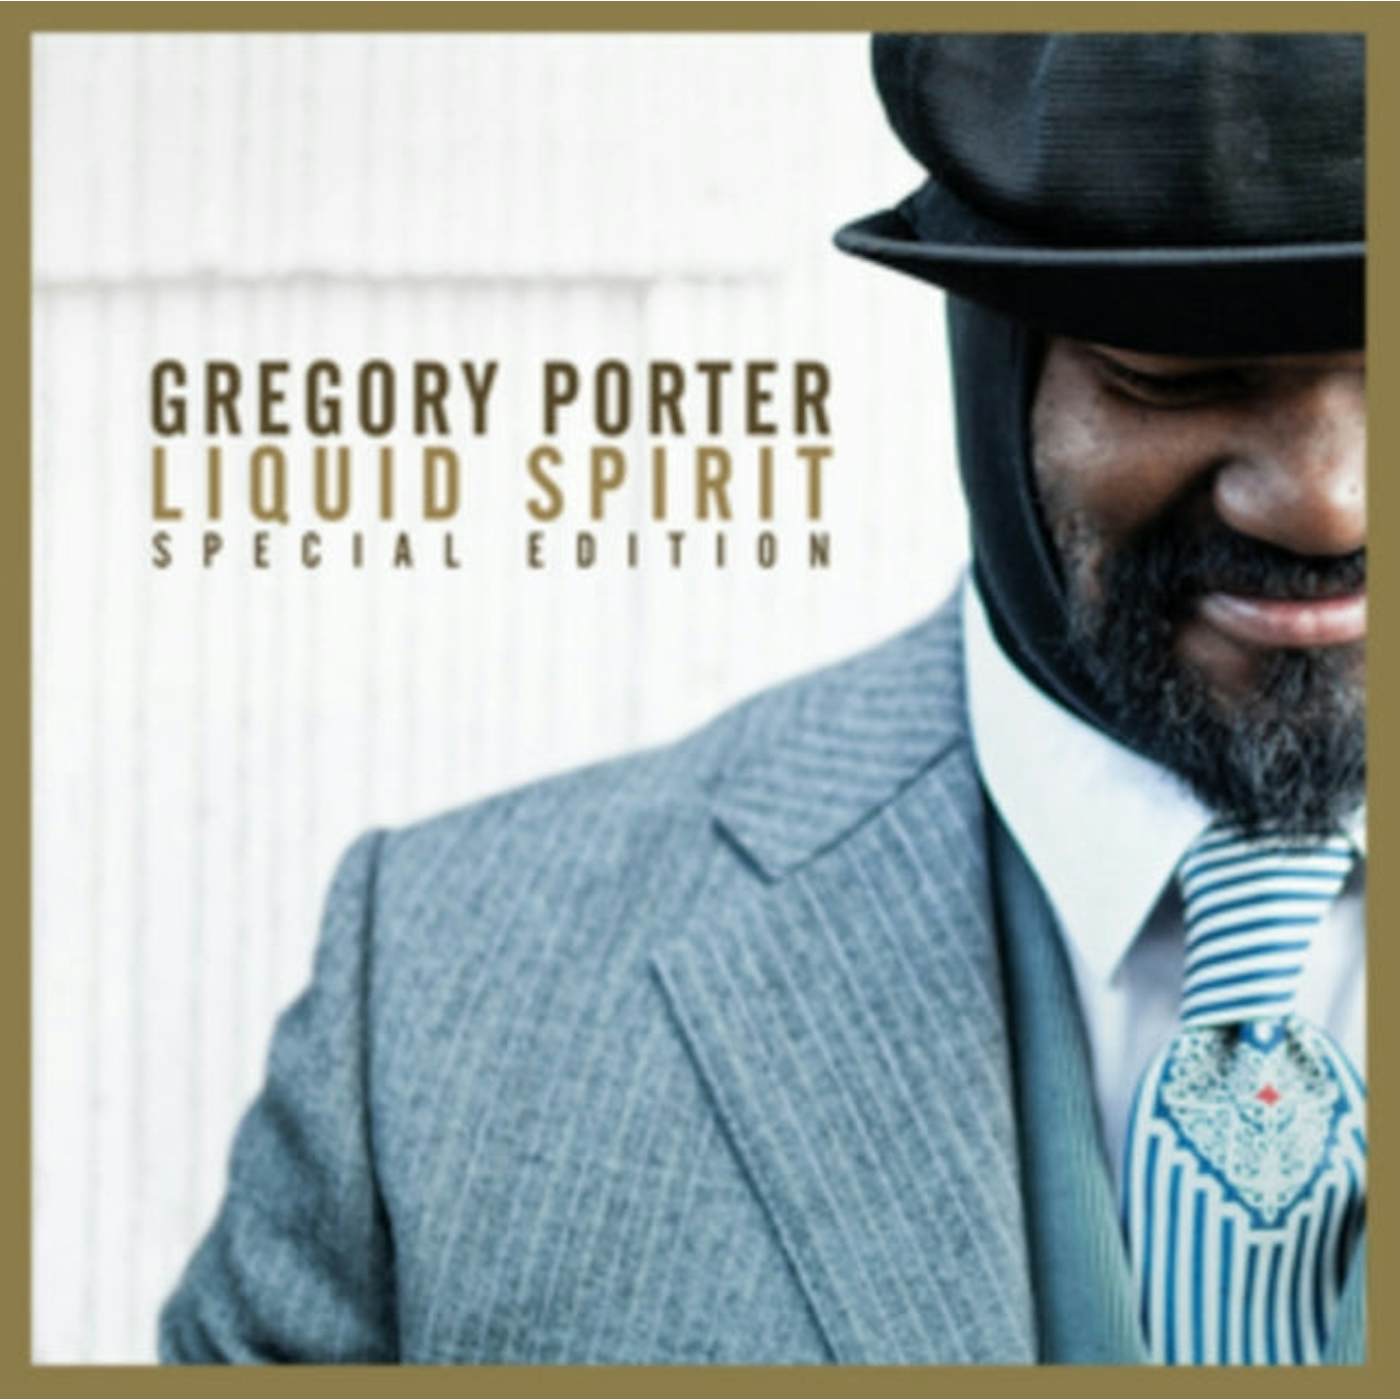 Gregory Porter CD - Liquid Spirit (Special Edition)